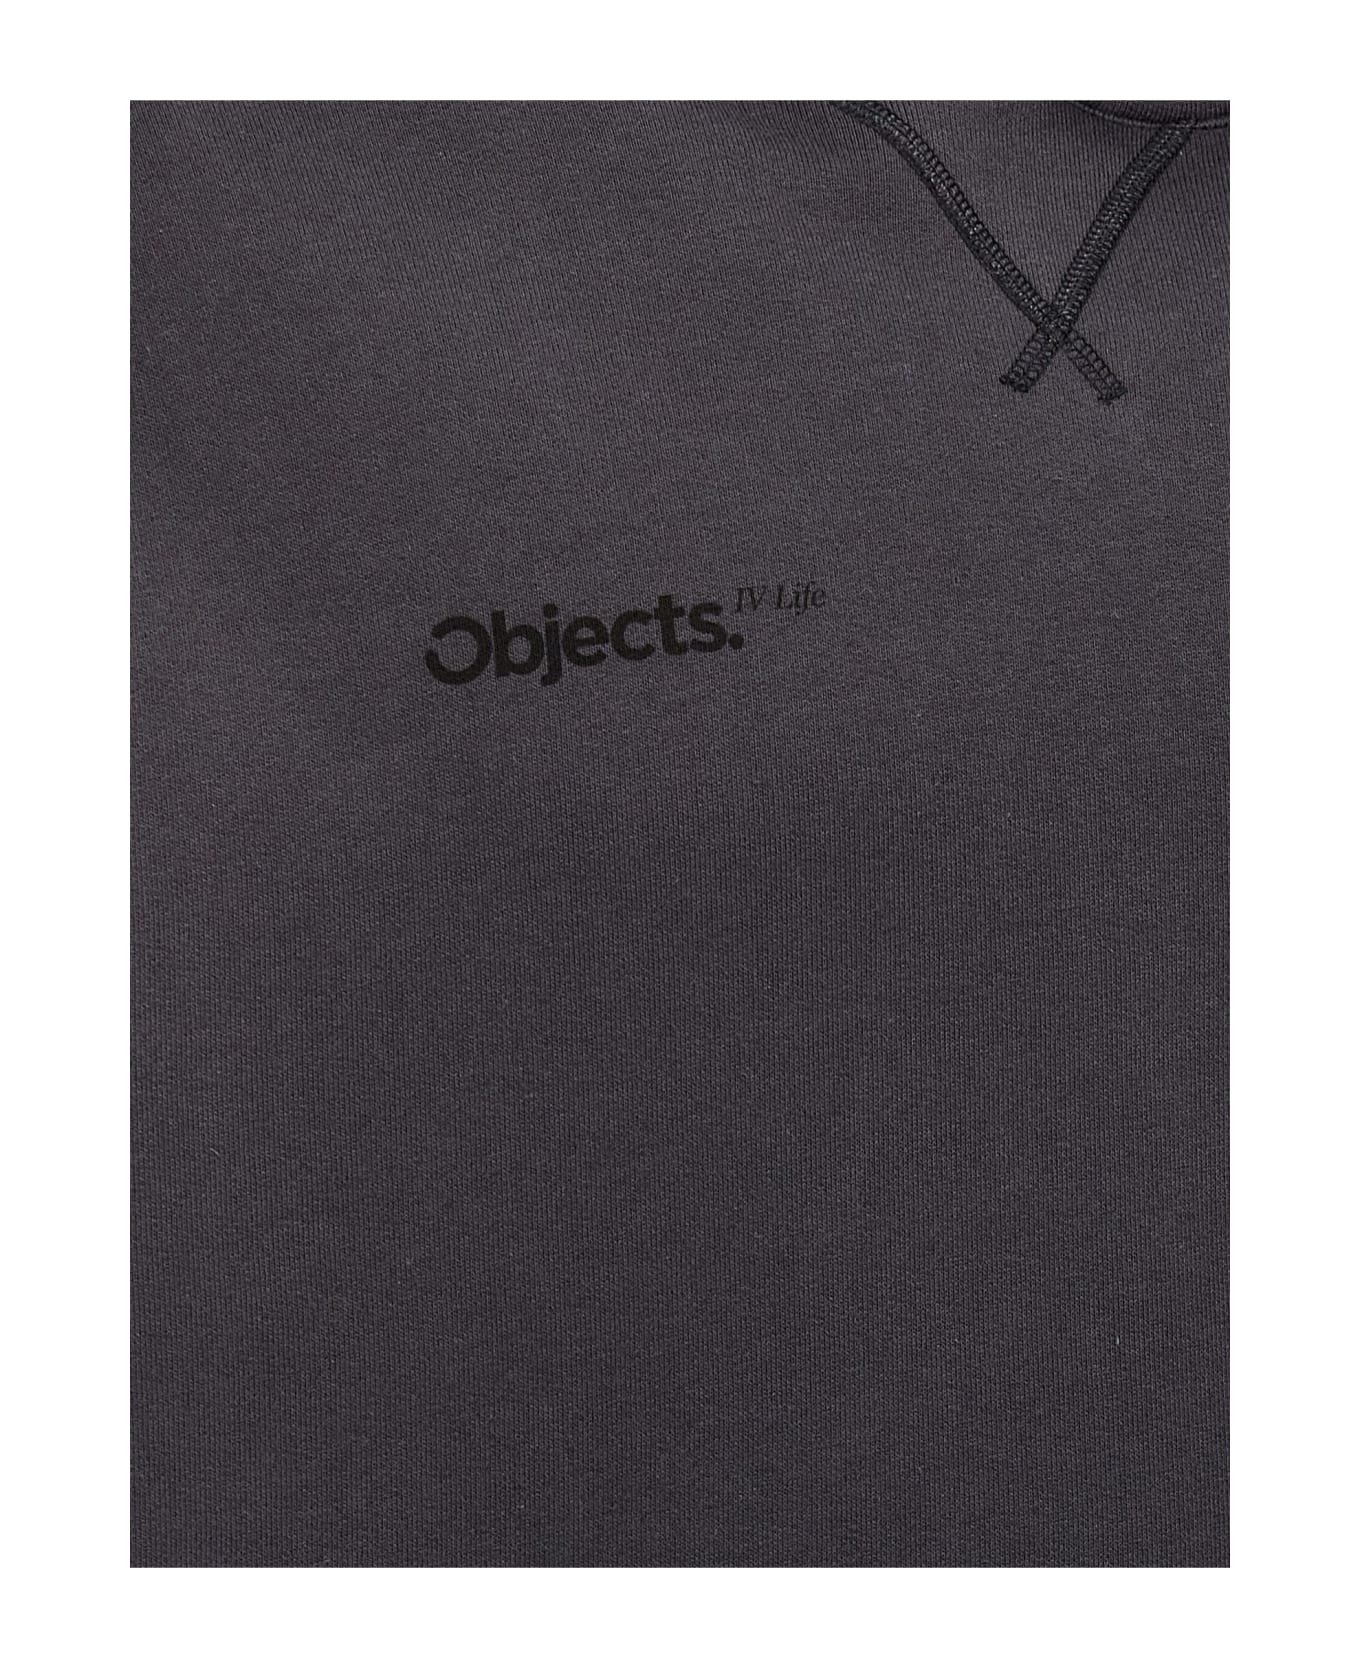 Objects Iv Life 'boulder Print' Hoodie - Gray フリース